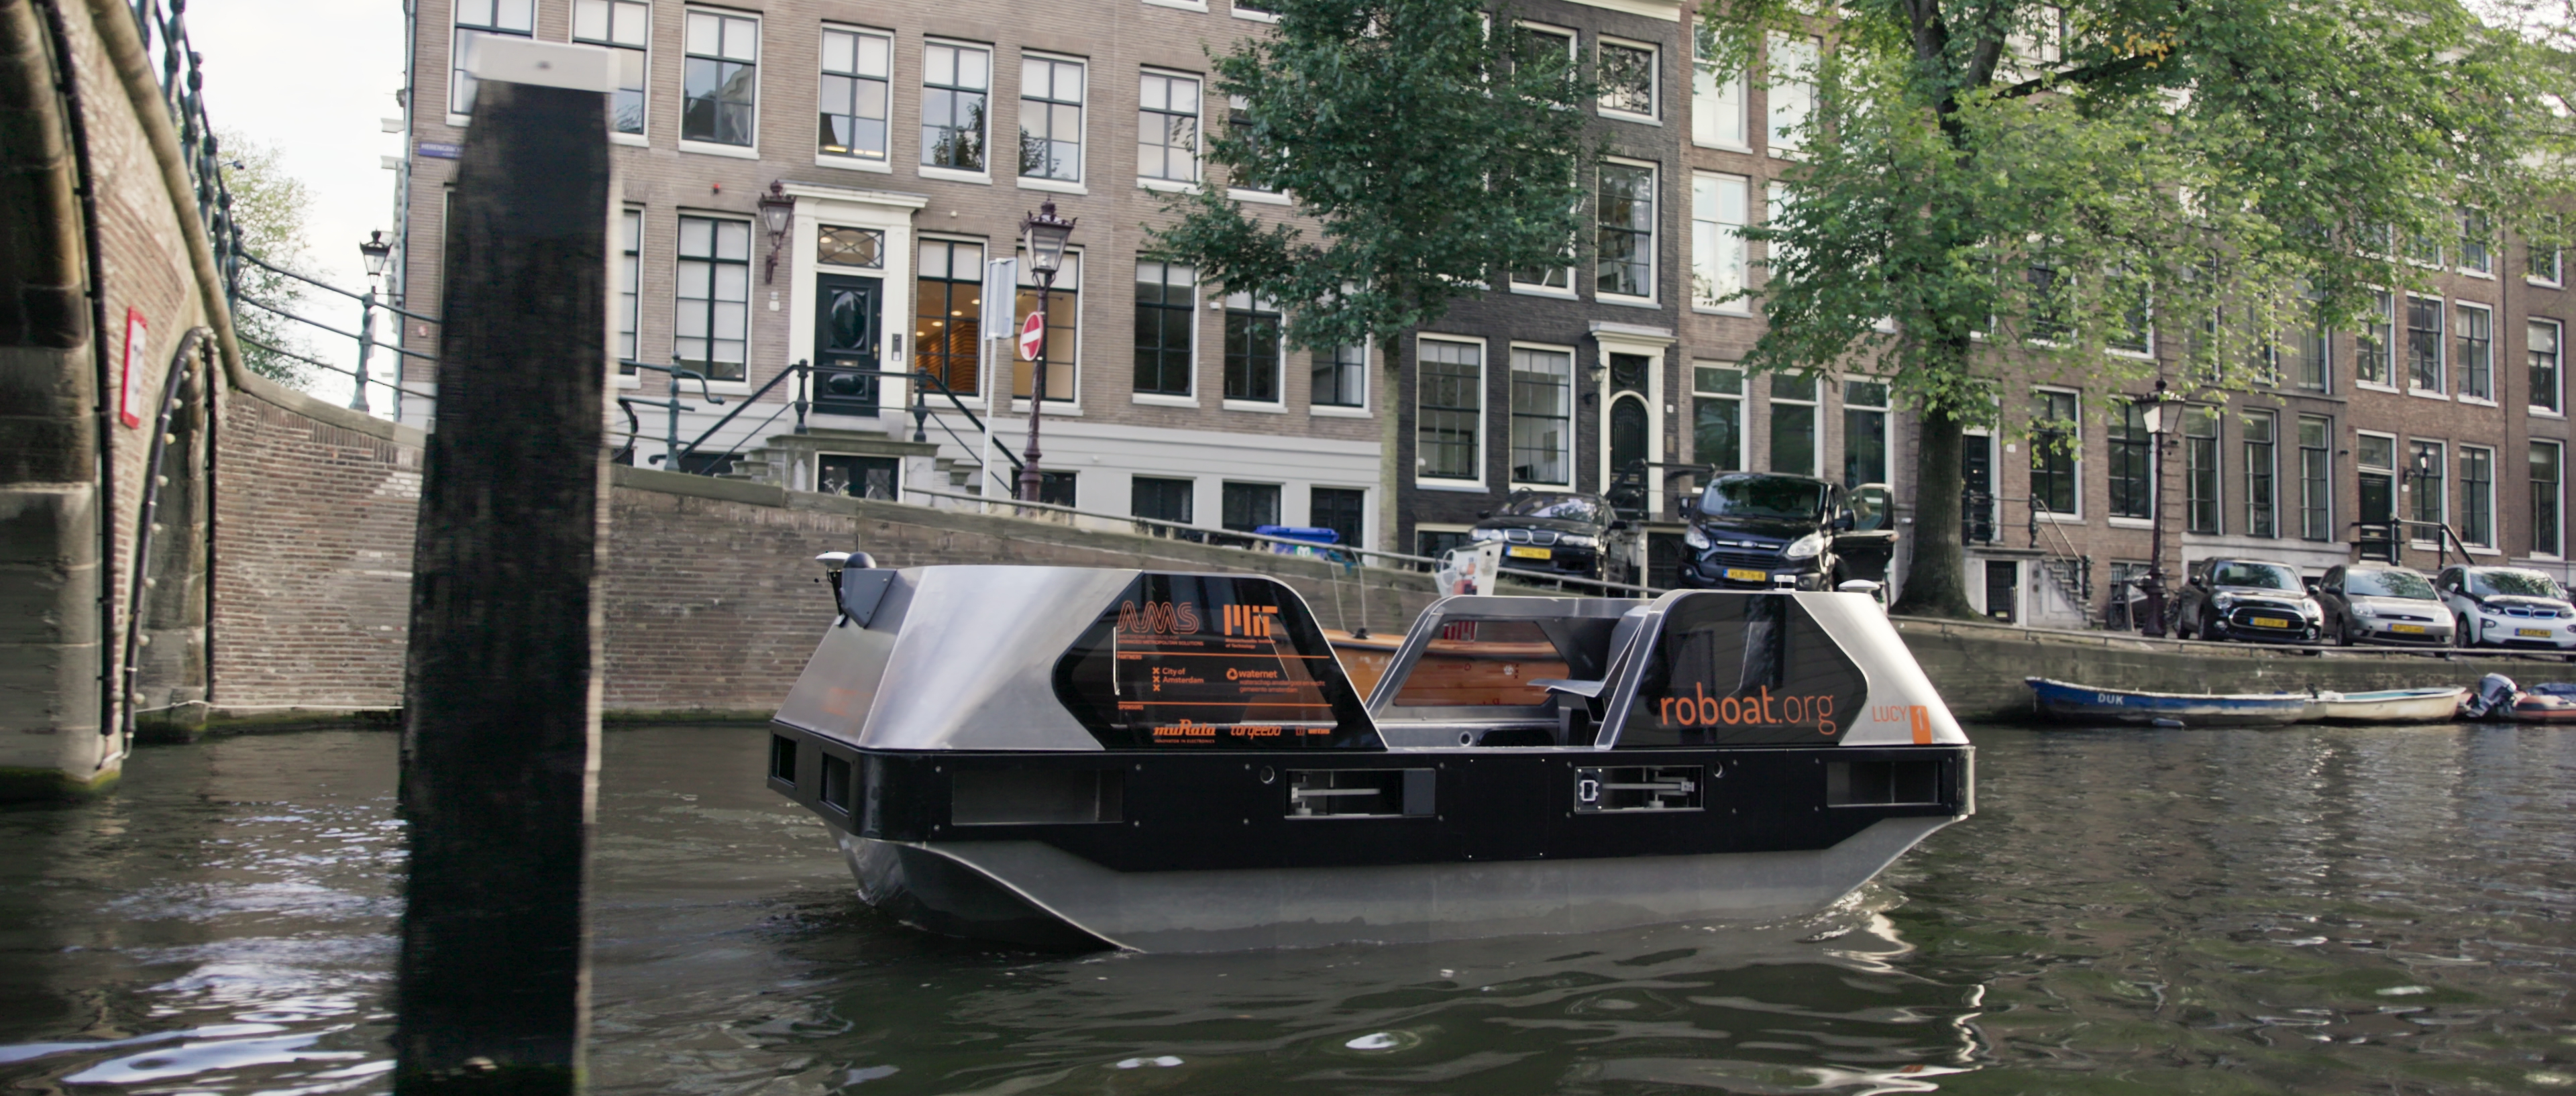 Roboat autonomous boat Amsterdam Amsterdam Institute for Advanced Metropolitan Solutions Massachusetts Institute of Technology